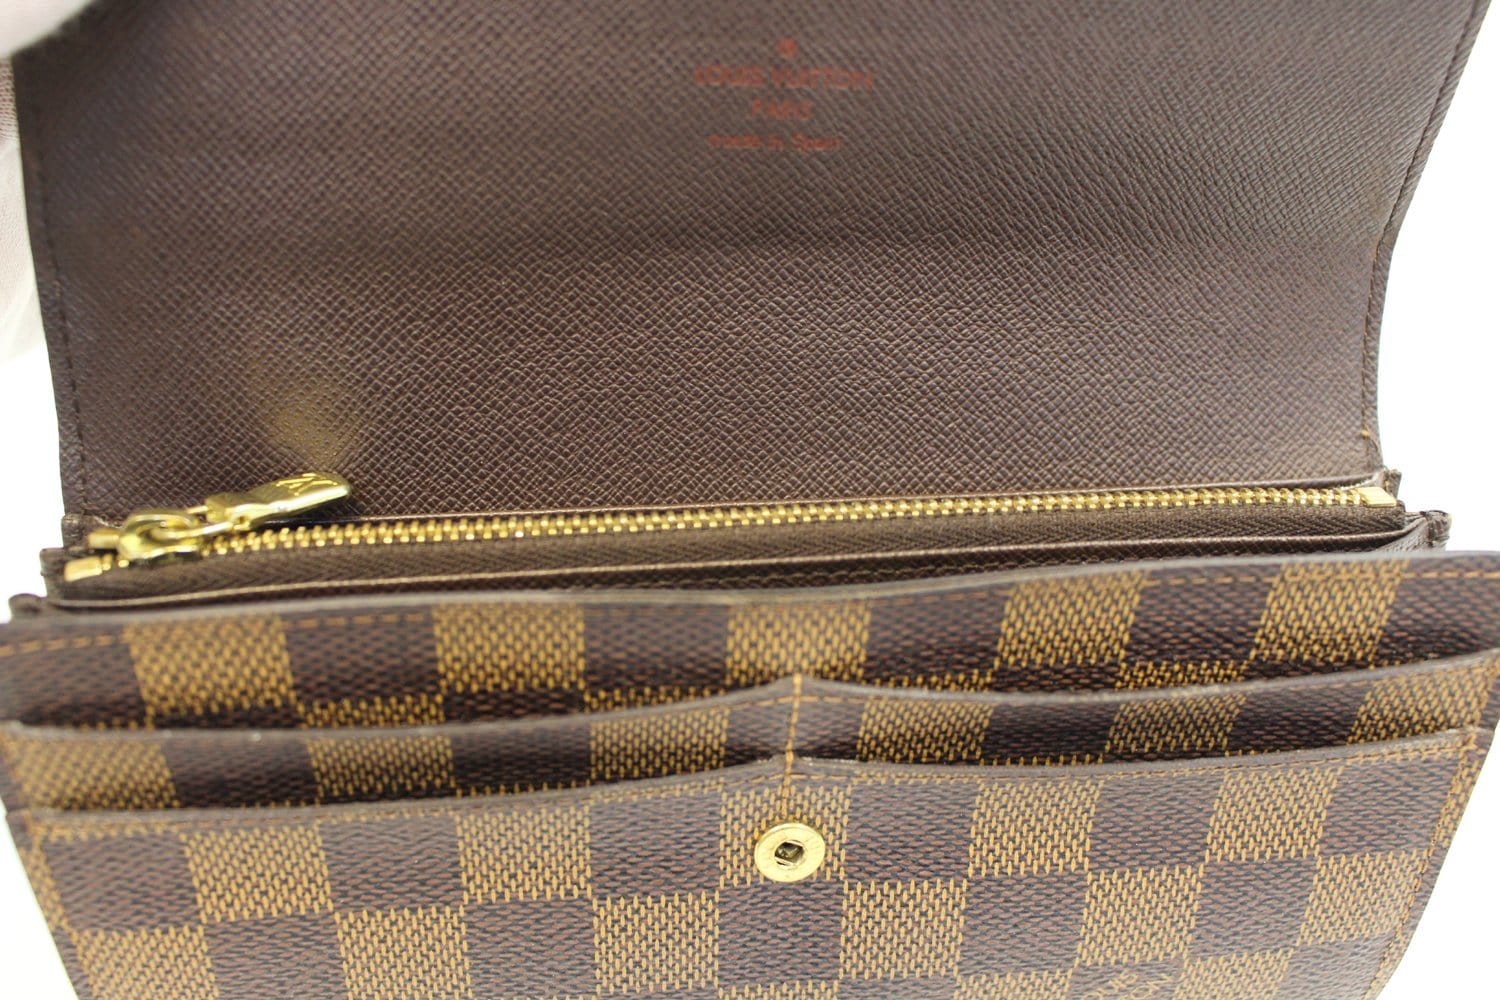 Louis Vuitton Damier Ebene Card Holder Long Bifold Wallet Leather